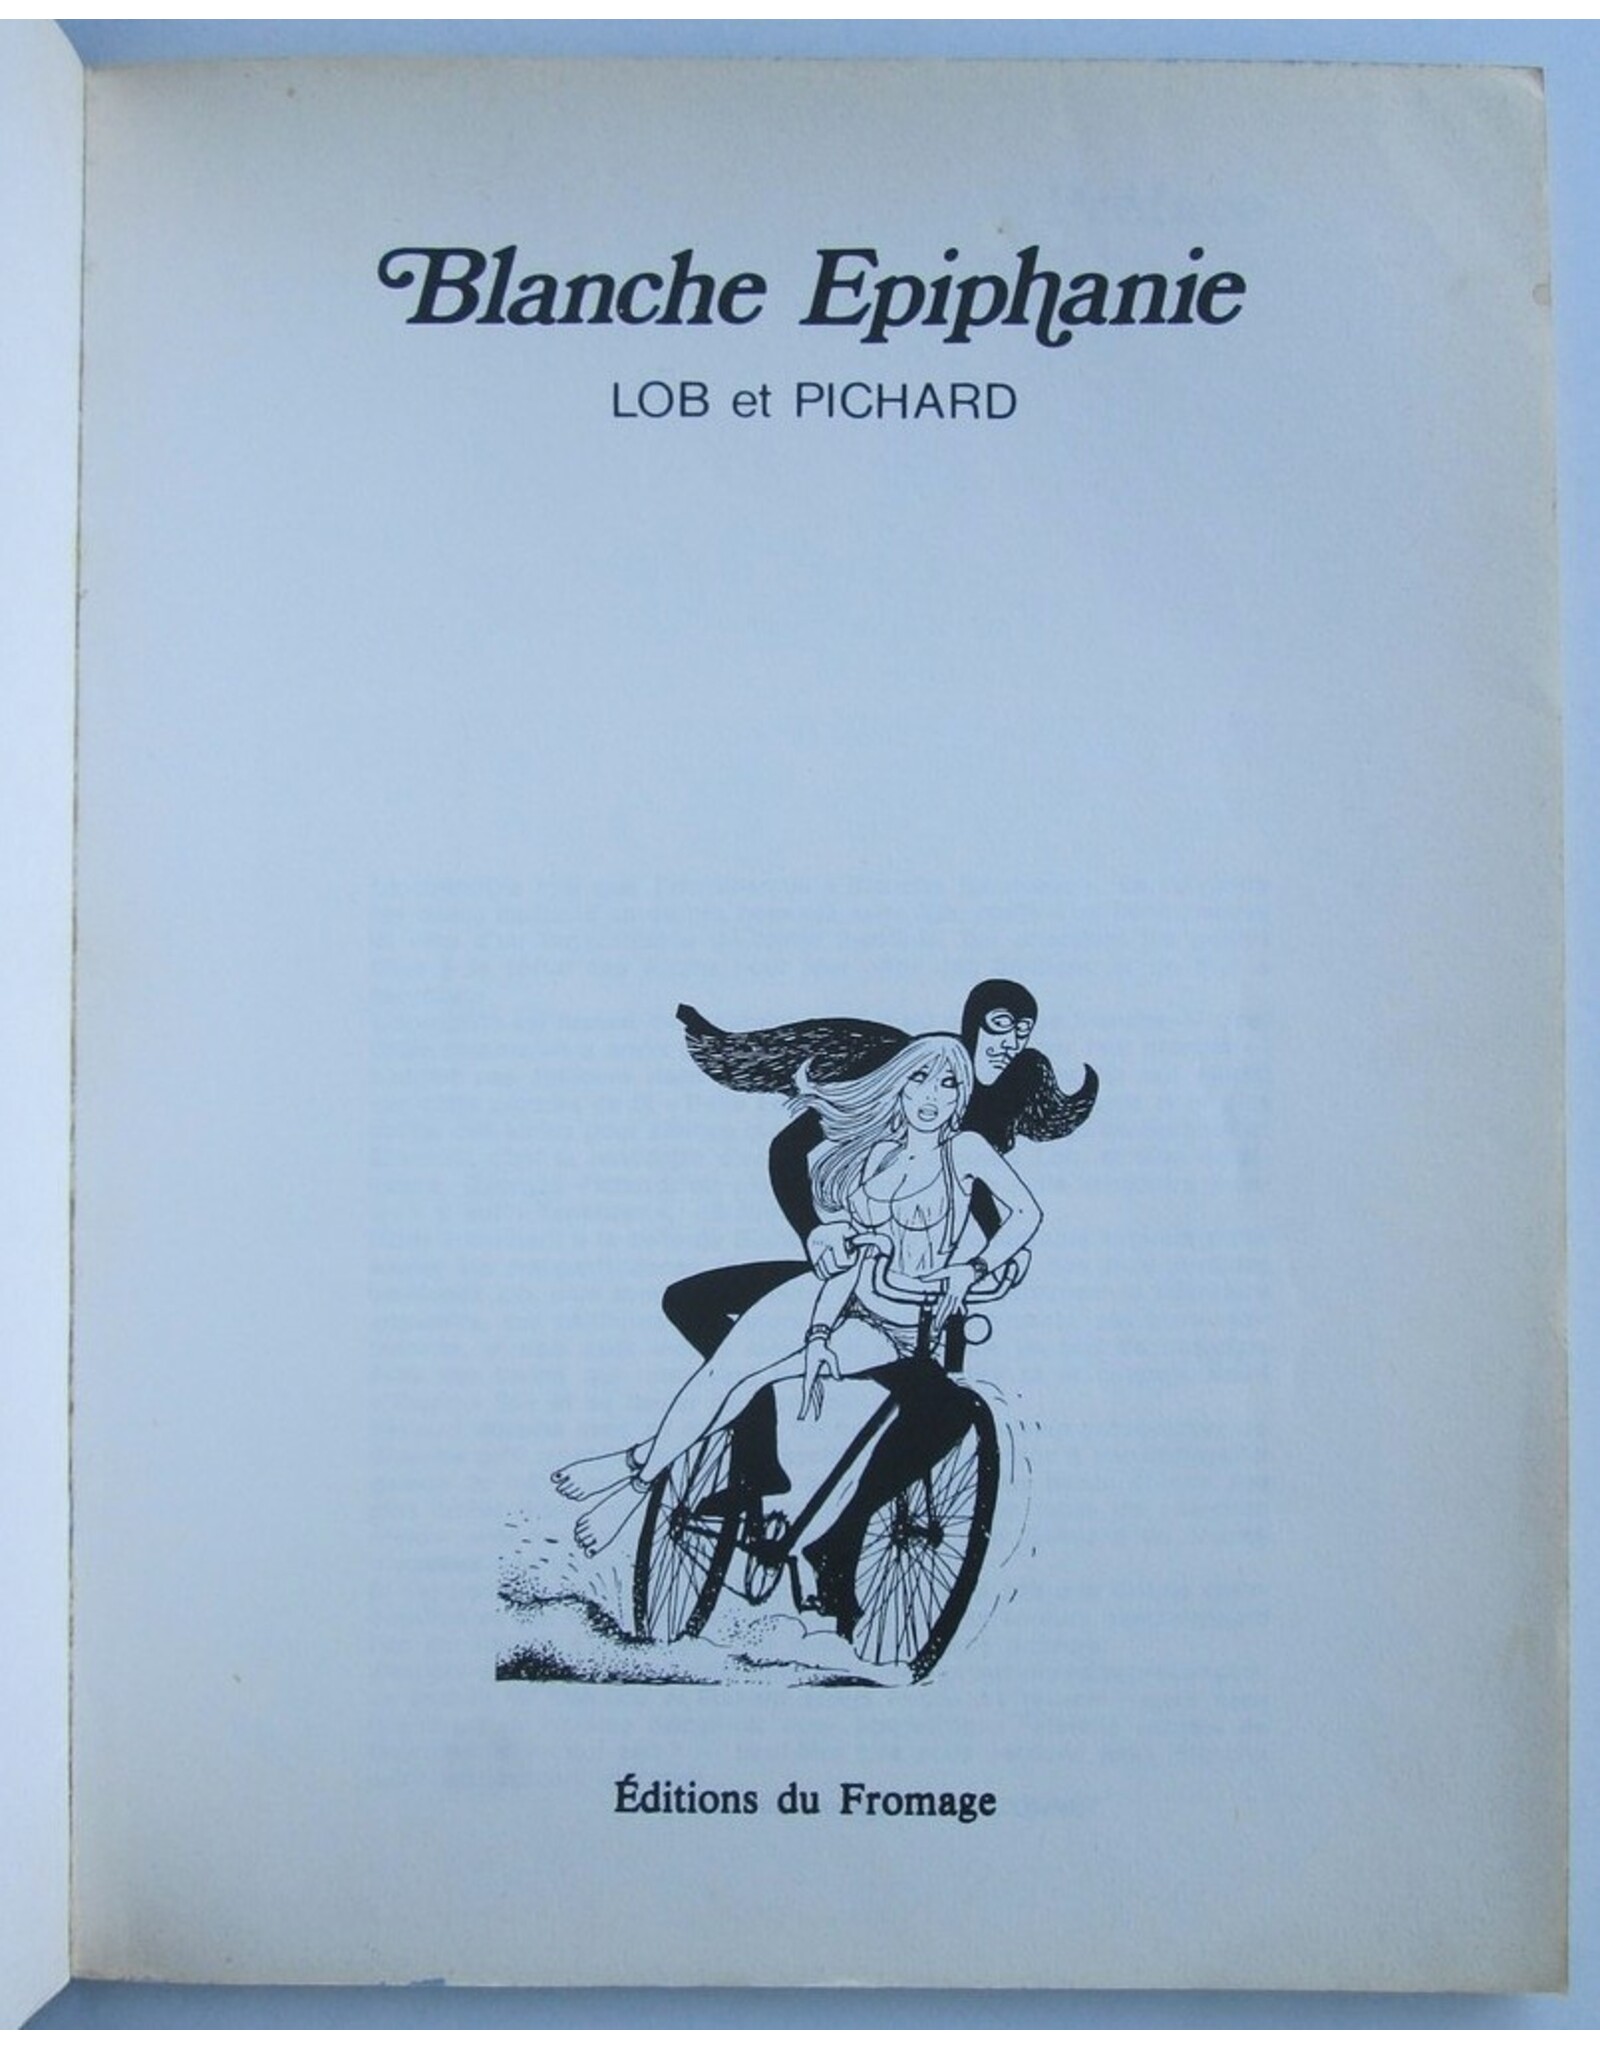 Georges Pichard & Lob - Blanche Epiphanie [1]